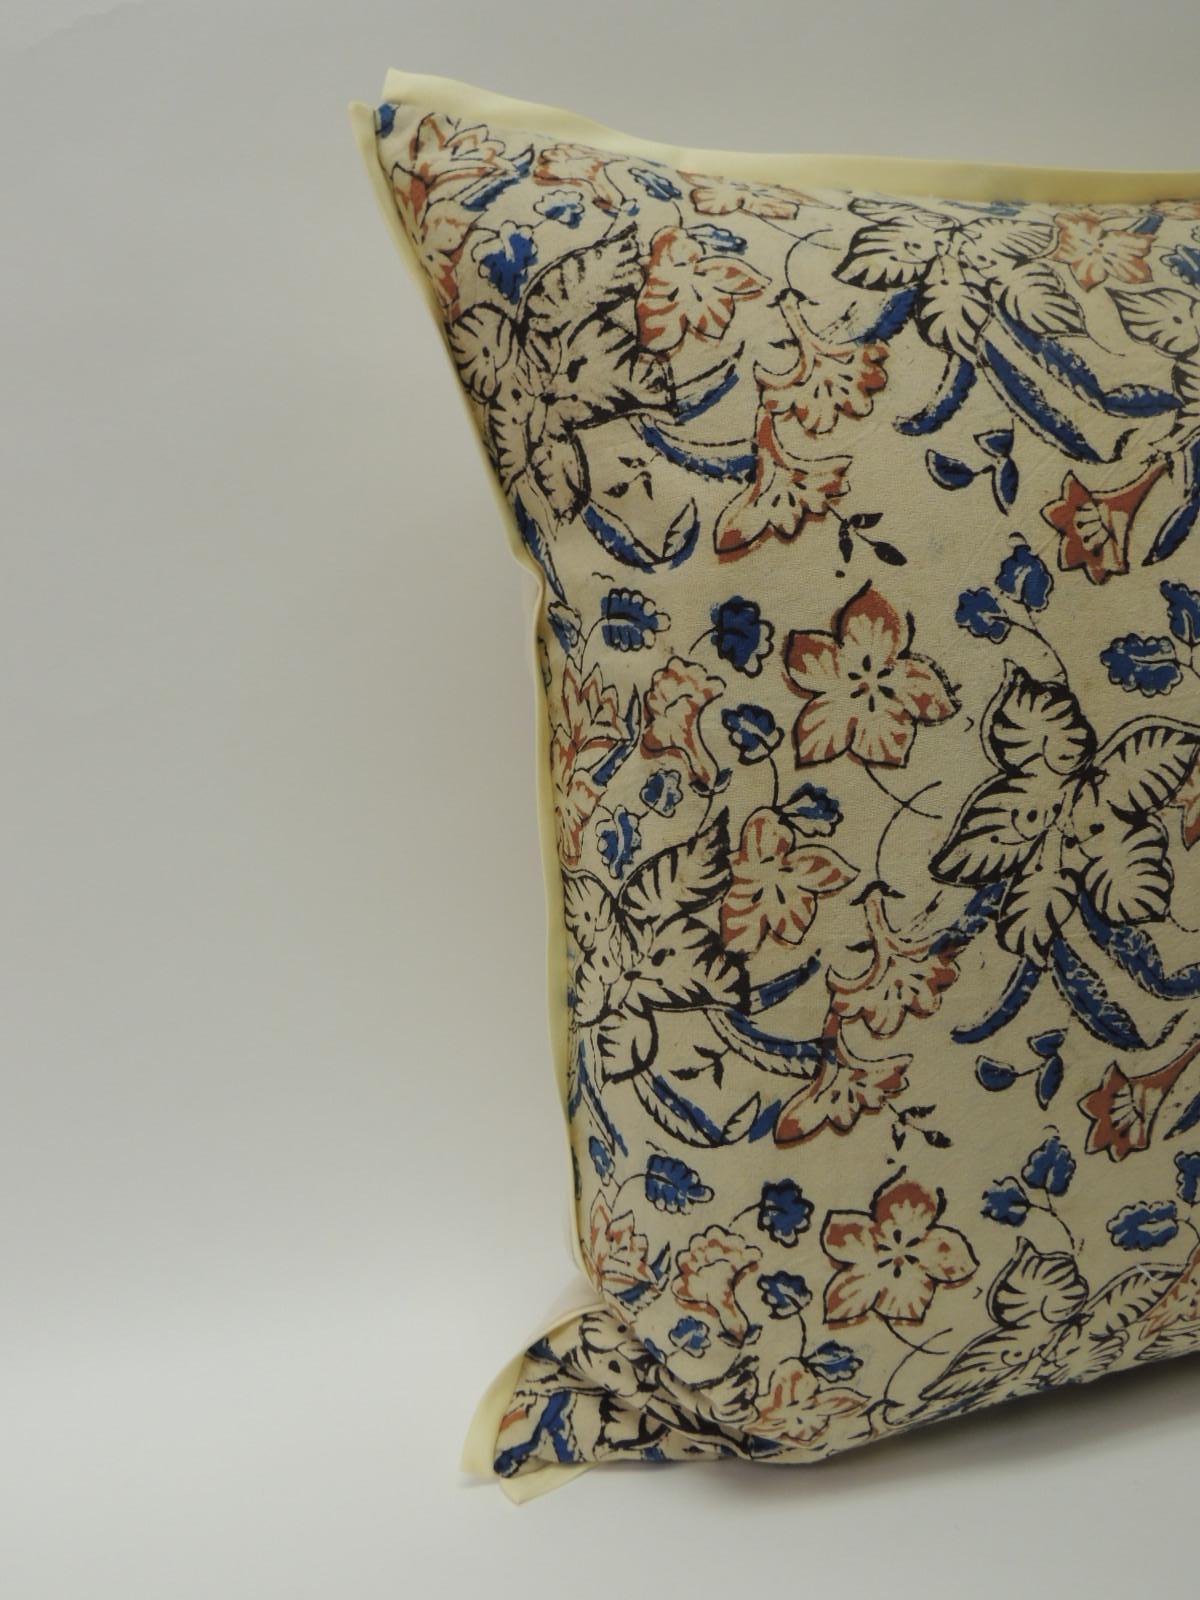 Moorish Vintage Indian Hand-Blocked Artisanal Textile Decorative Square Pillow